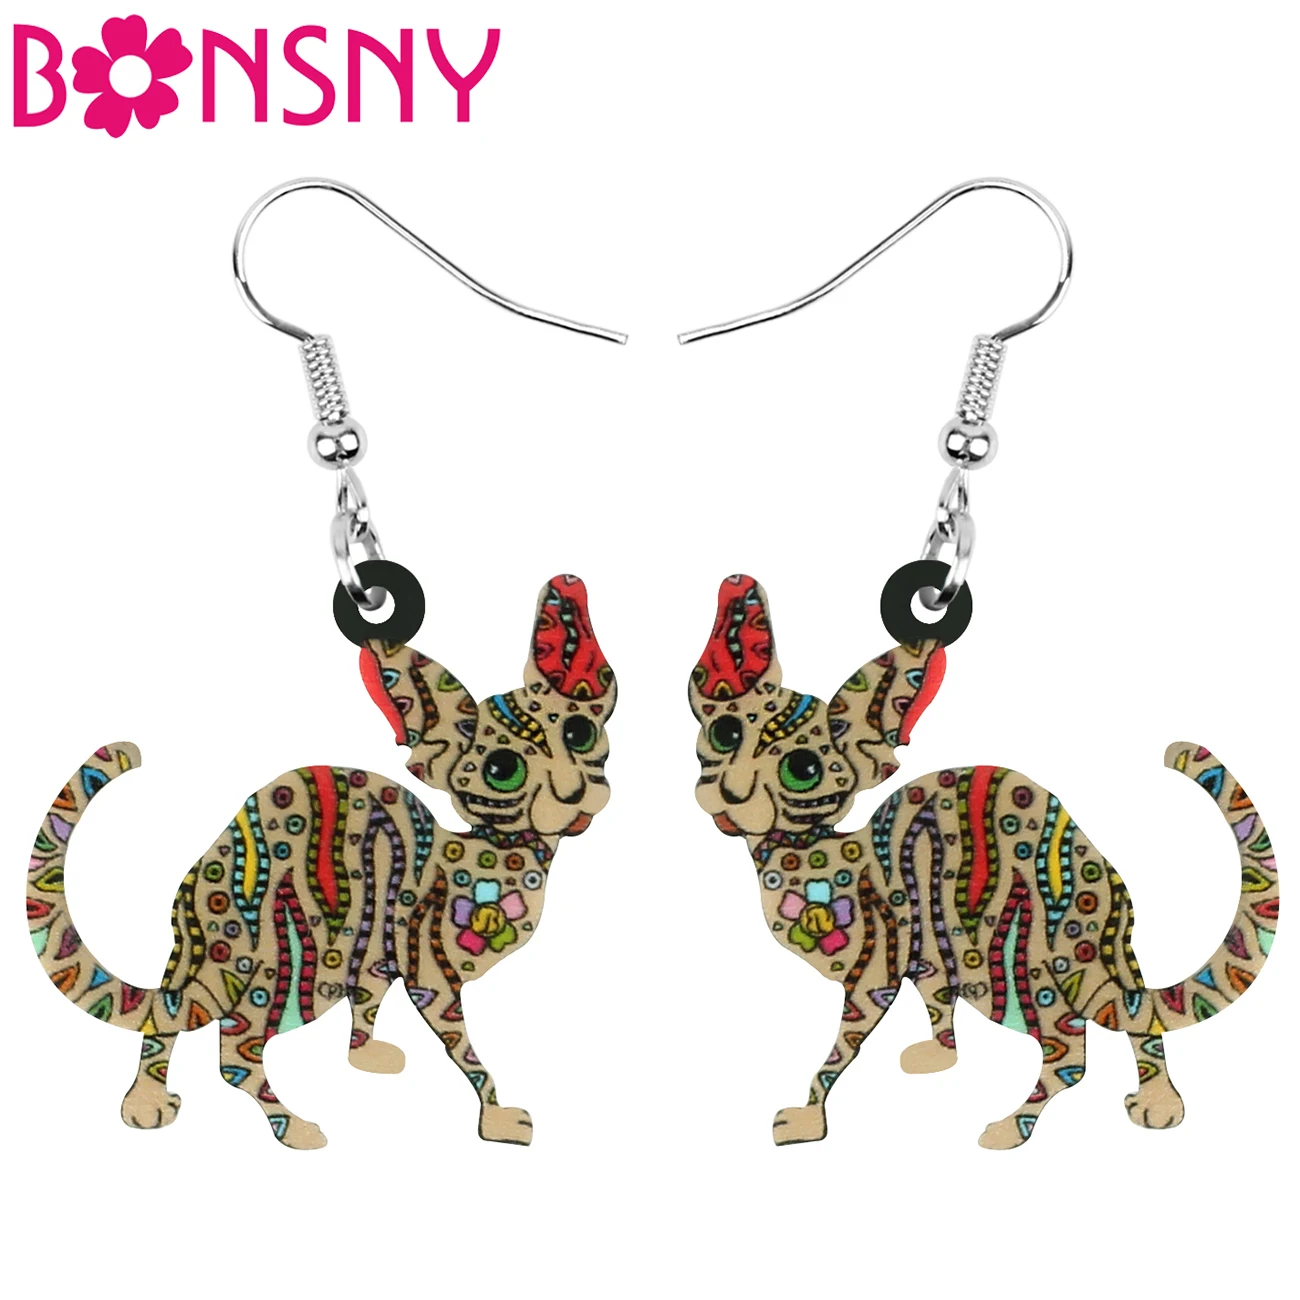 

Bonsny Acrylic Canadian Hairless Cat Earrings Big Cute Animal Dangle Drop Jewelry For Women Girls Kids Fashion Gift Decoration